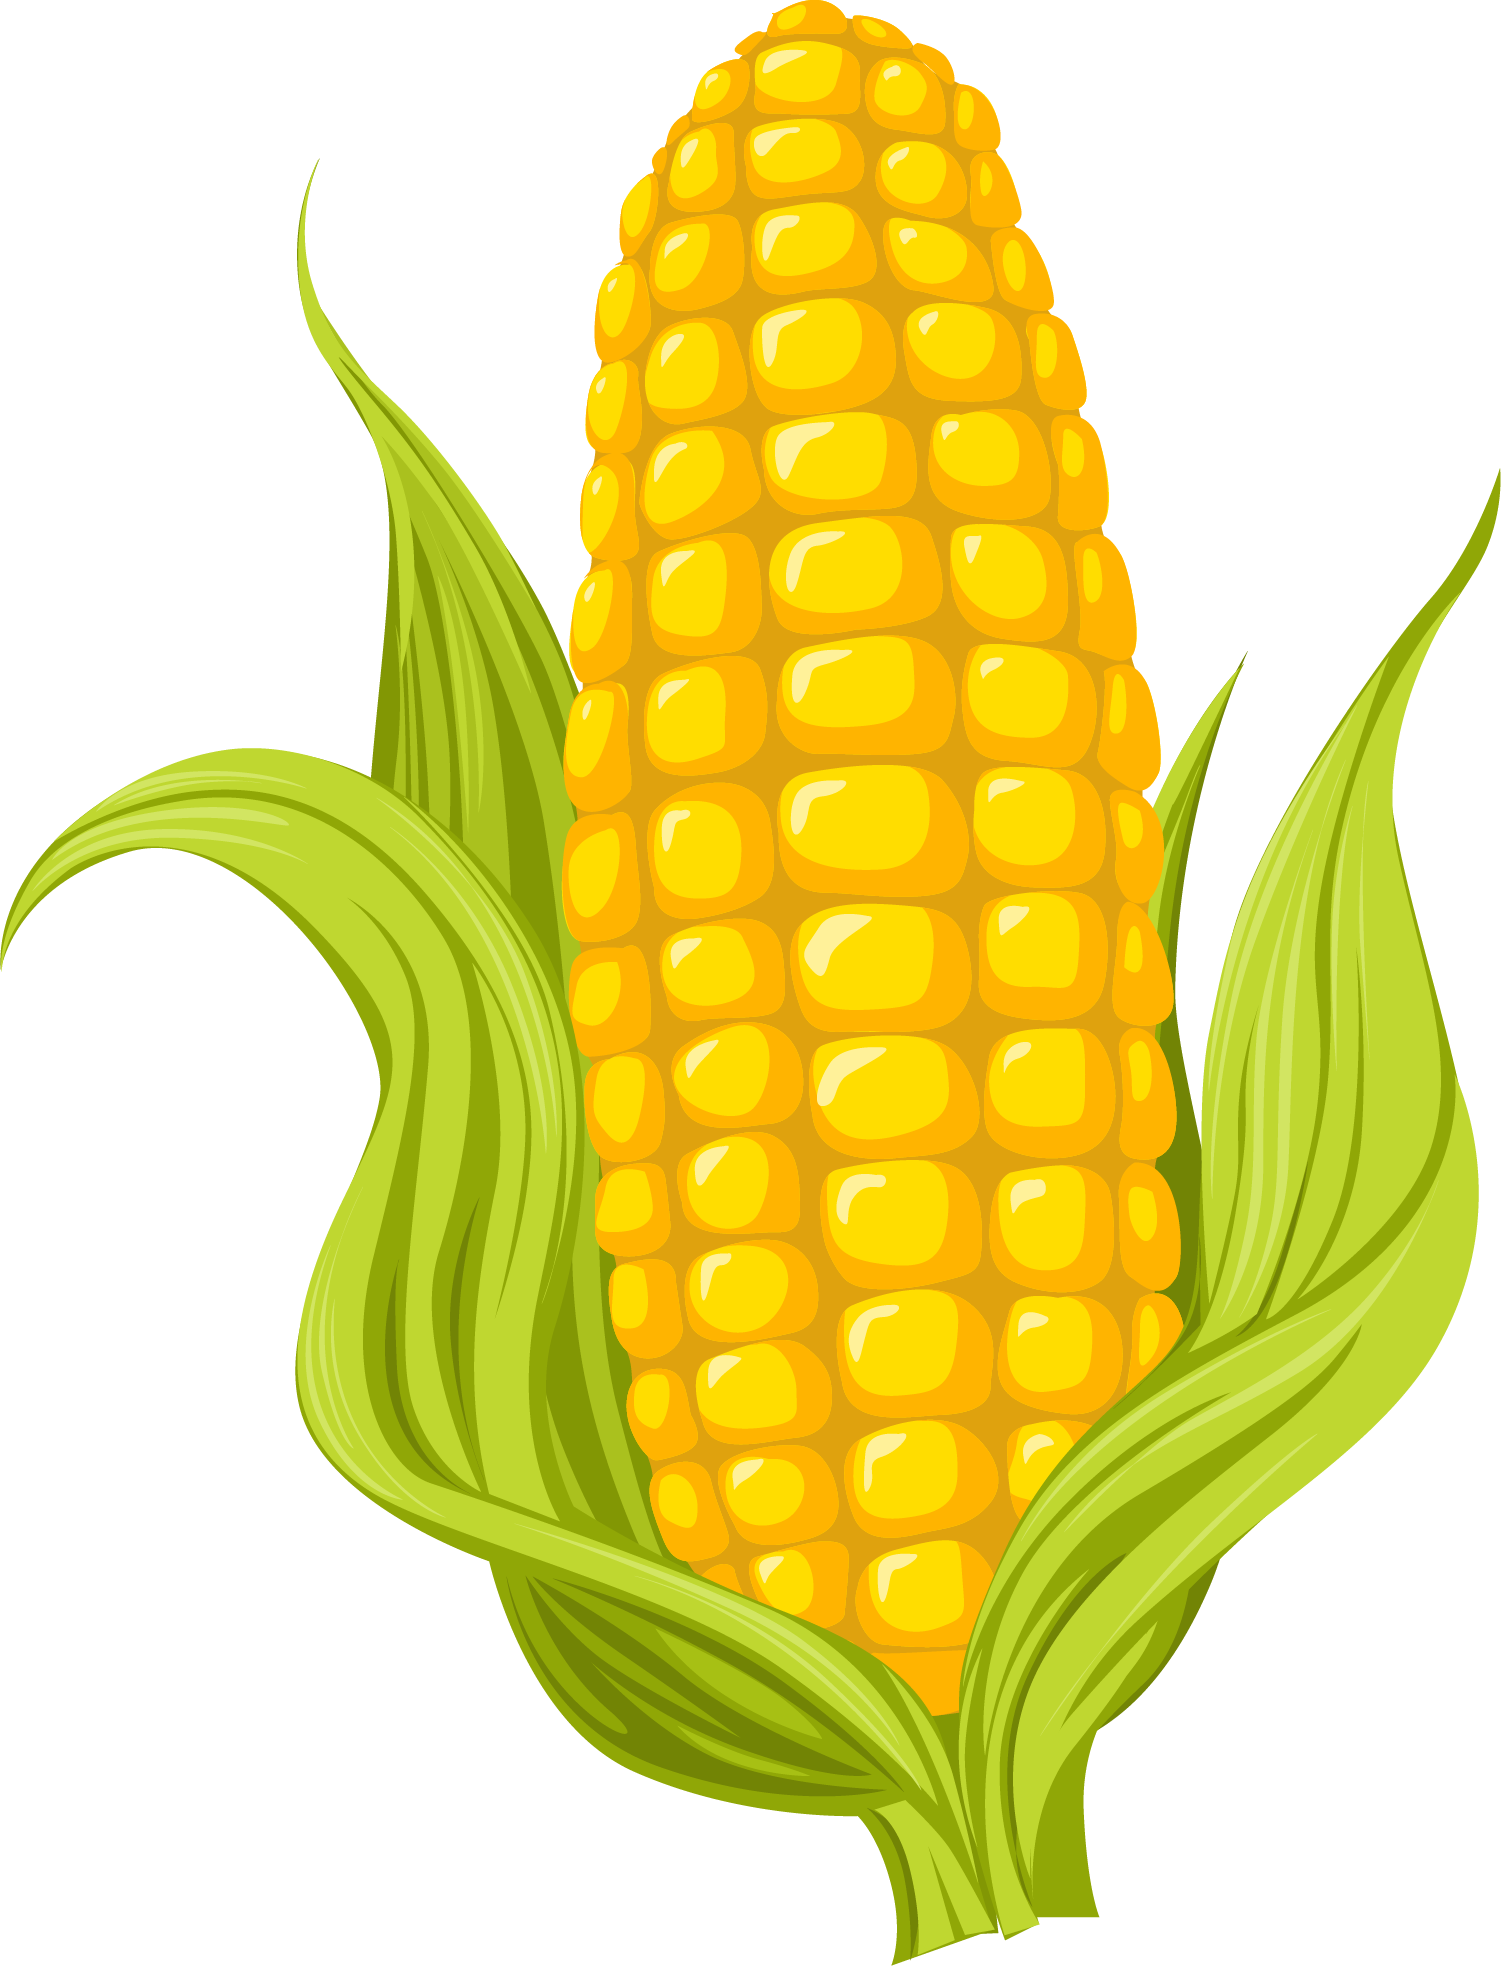 Cartoon corn images